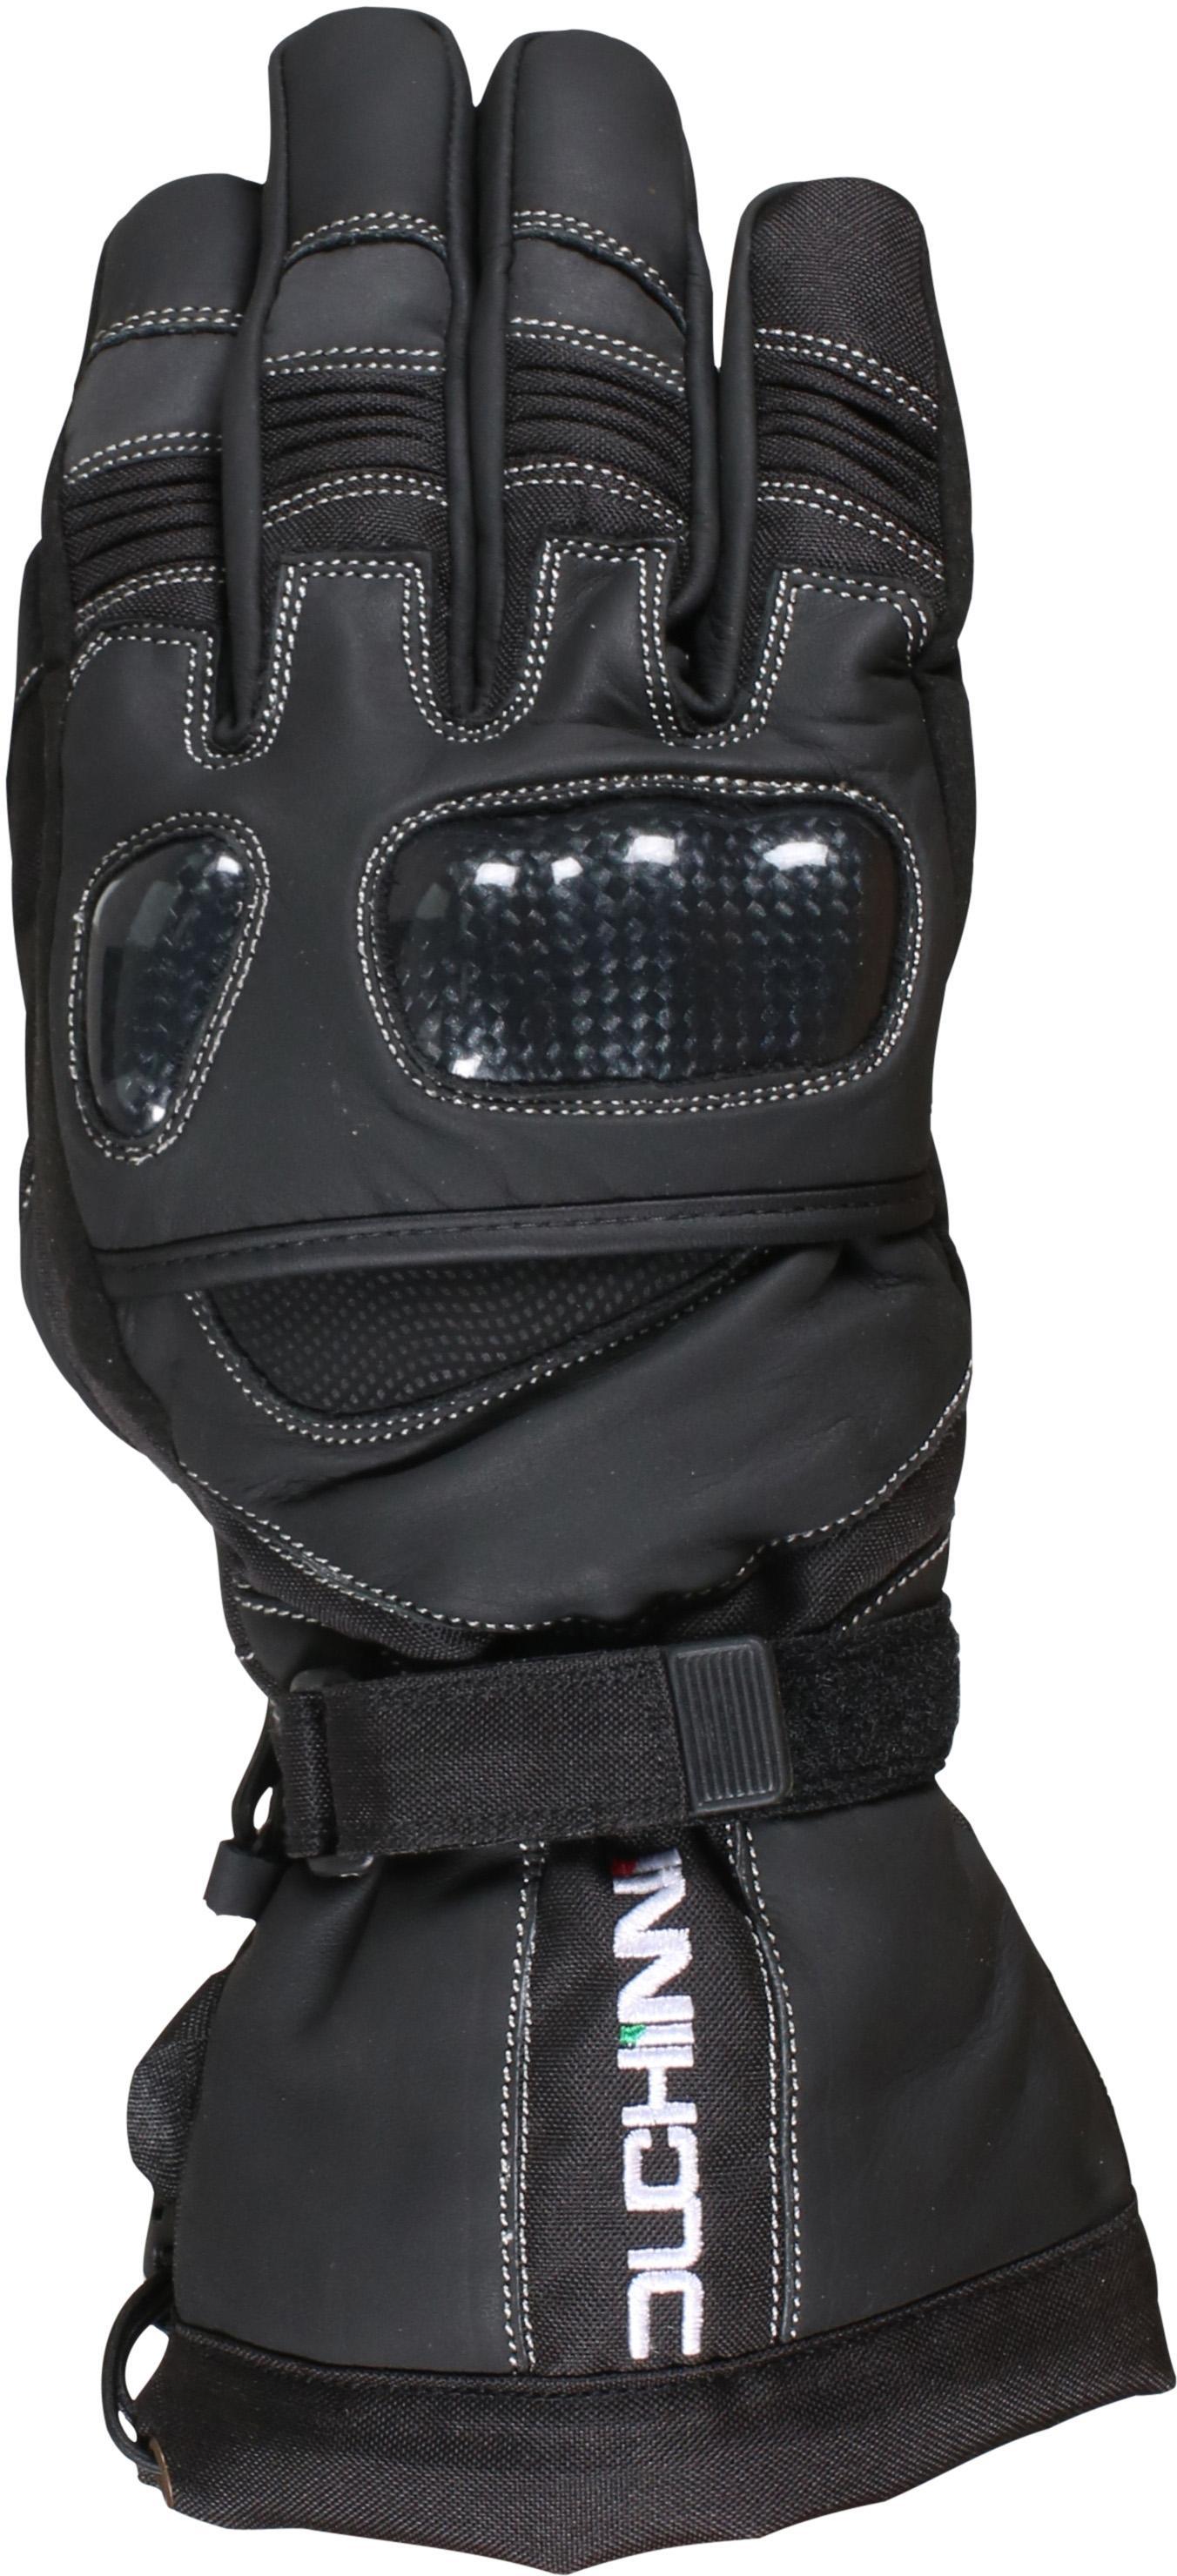 Duchinni Yukon Motorcycle Gloves - Black, 3Xl